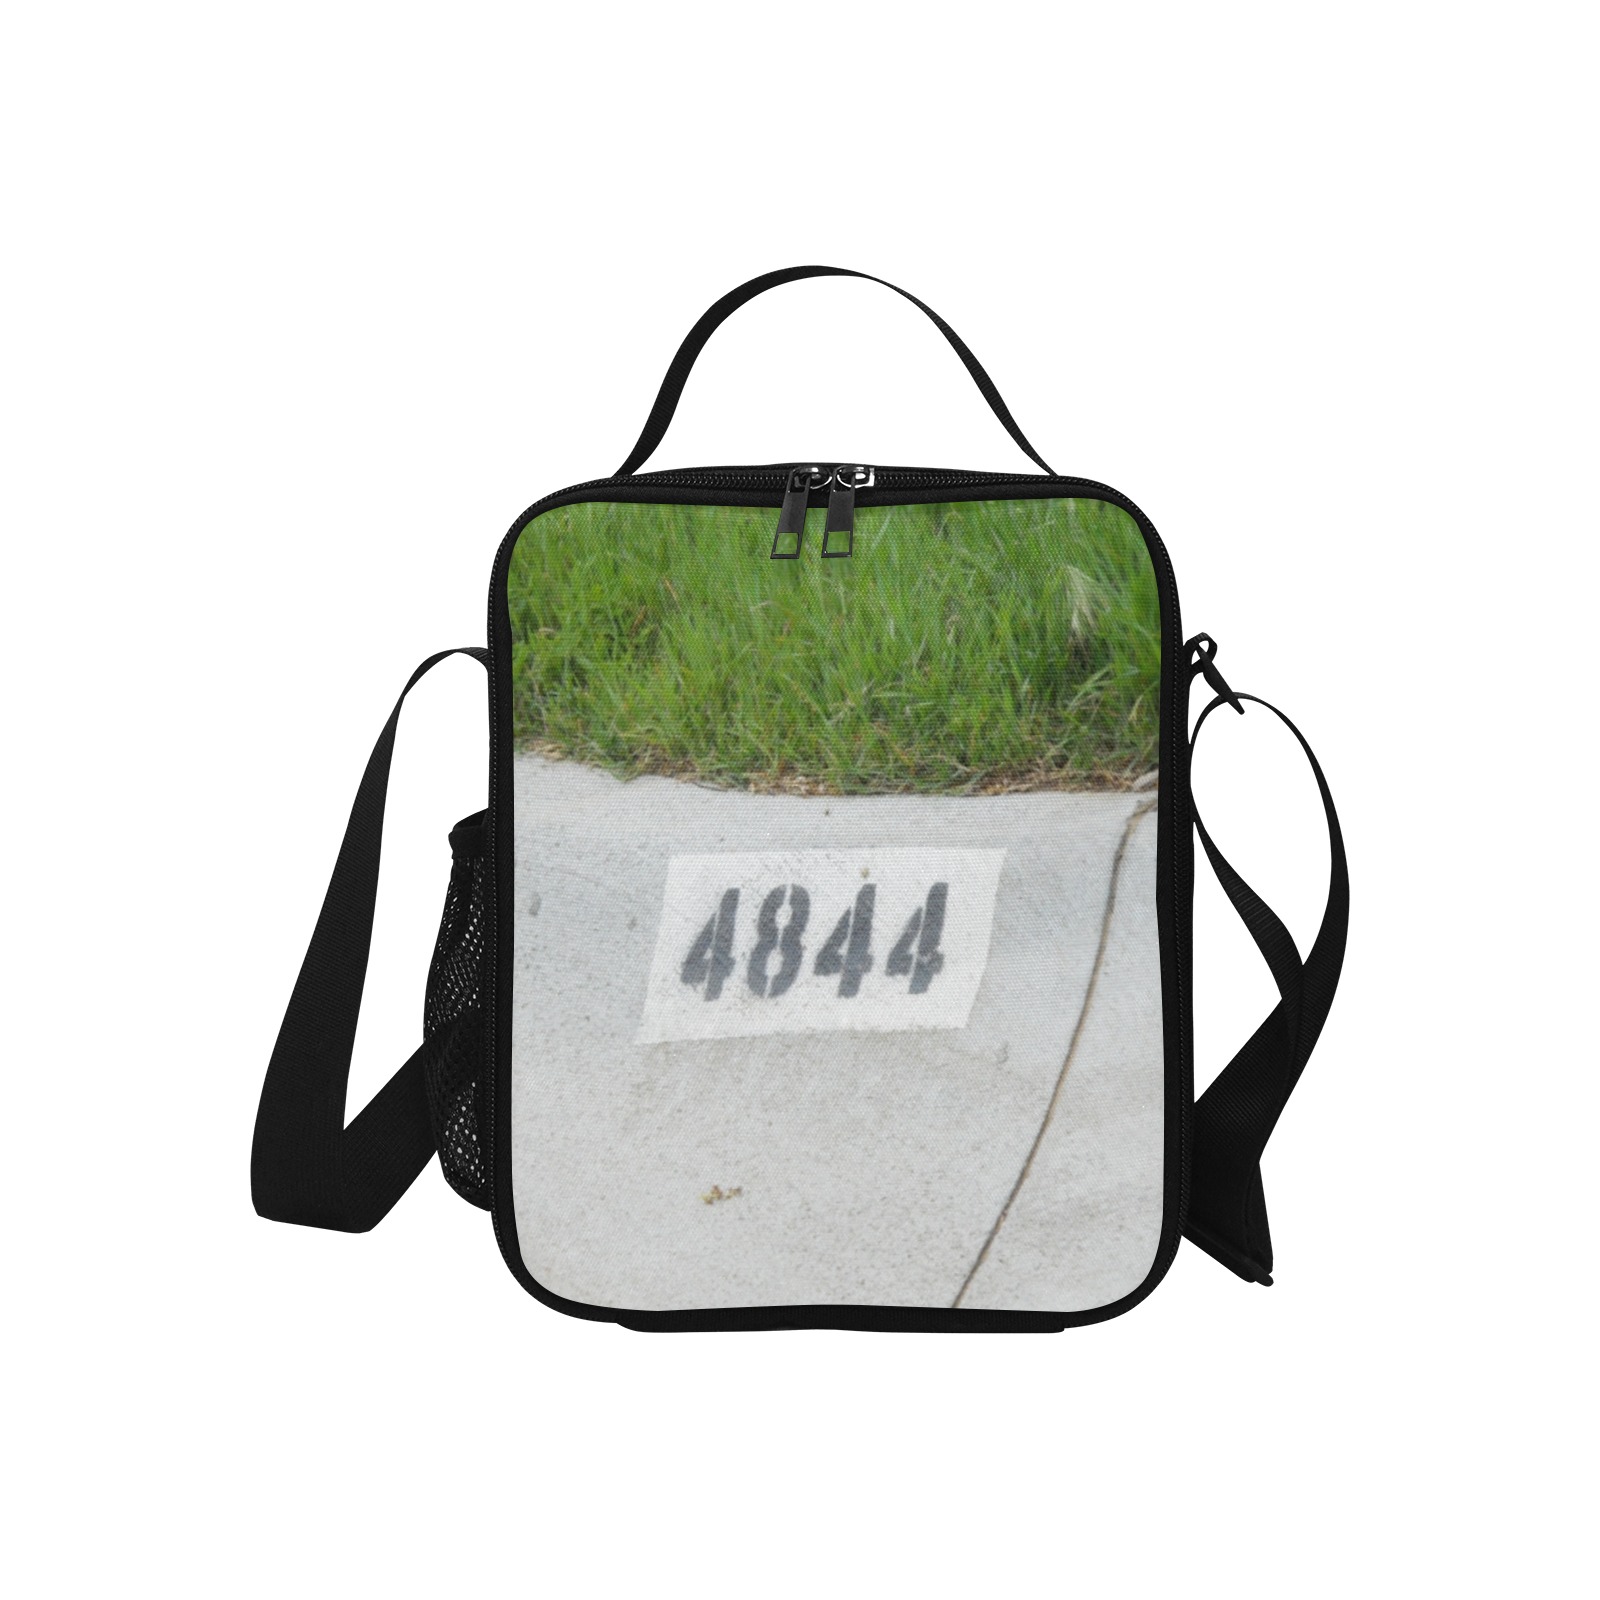 Street Number 4844 Crossbody Lunch Bag for Kids (Model 1722)